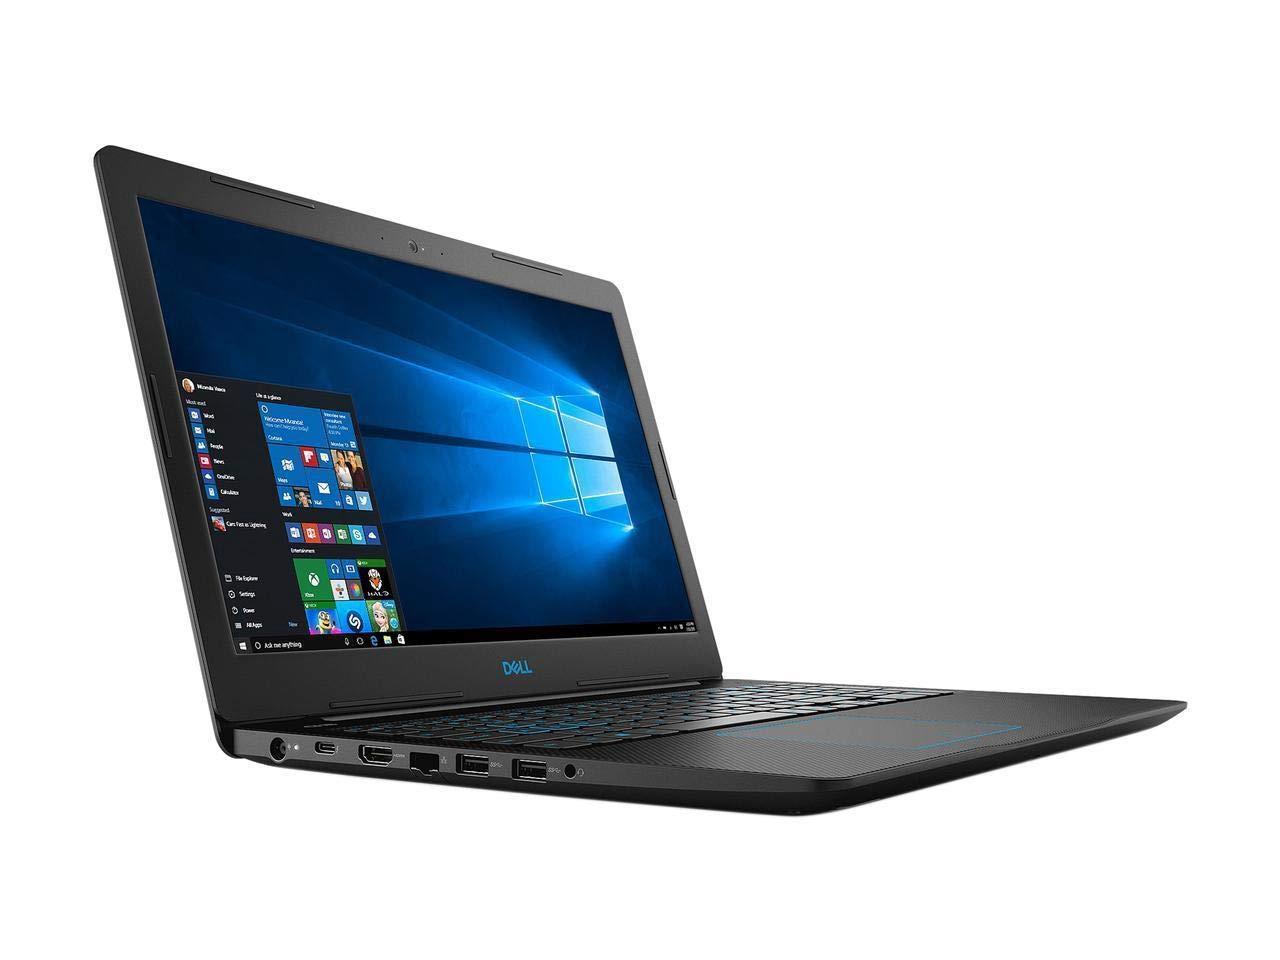 Newest Dell 15.6" FHD IPS High-Performance Gaming Laptop | Intel Core i5-8300H Quad-Core| 16GB DDR4 RAM |1TB +8GB Hybrid |NVIDIA GeForce GTX 1050Ti 4GB | Backlit Keyboard | MaxxAudio|Windows 10